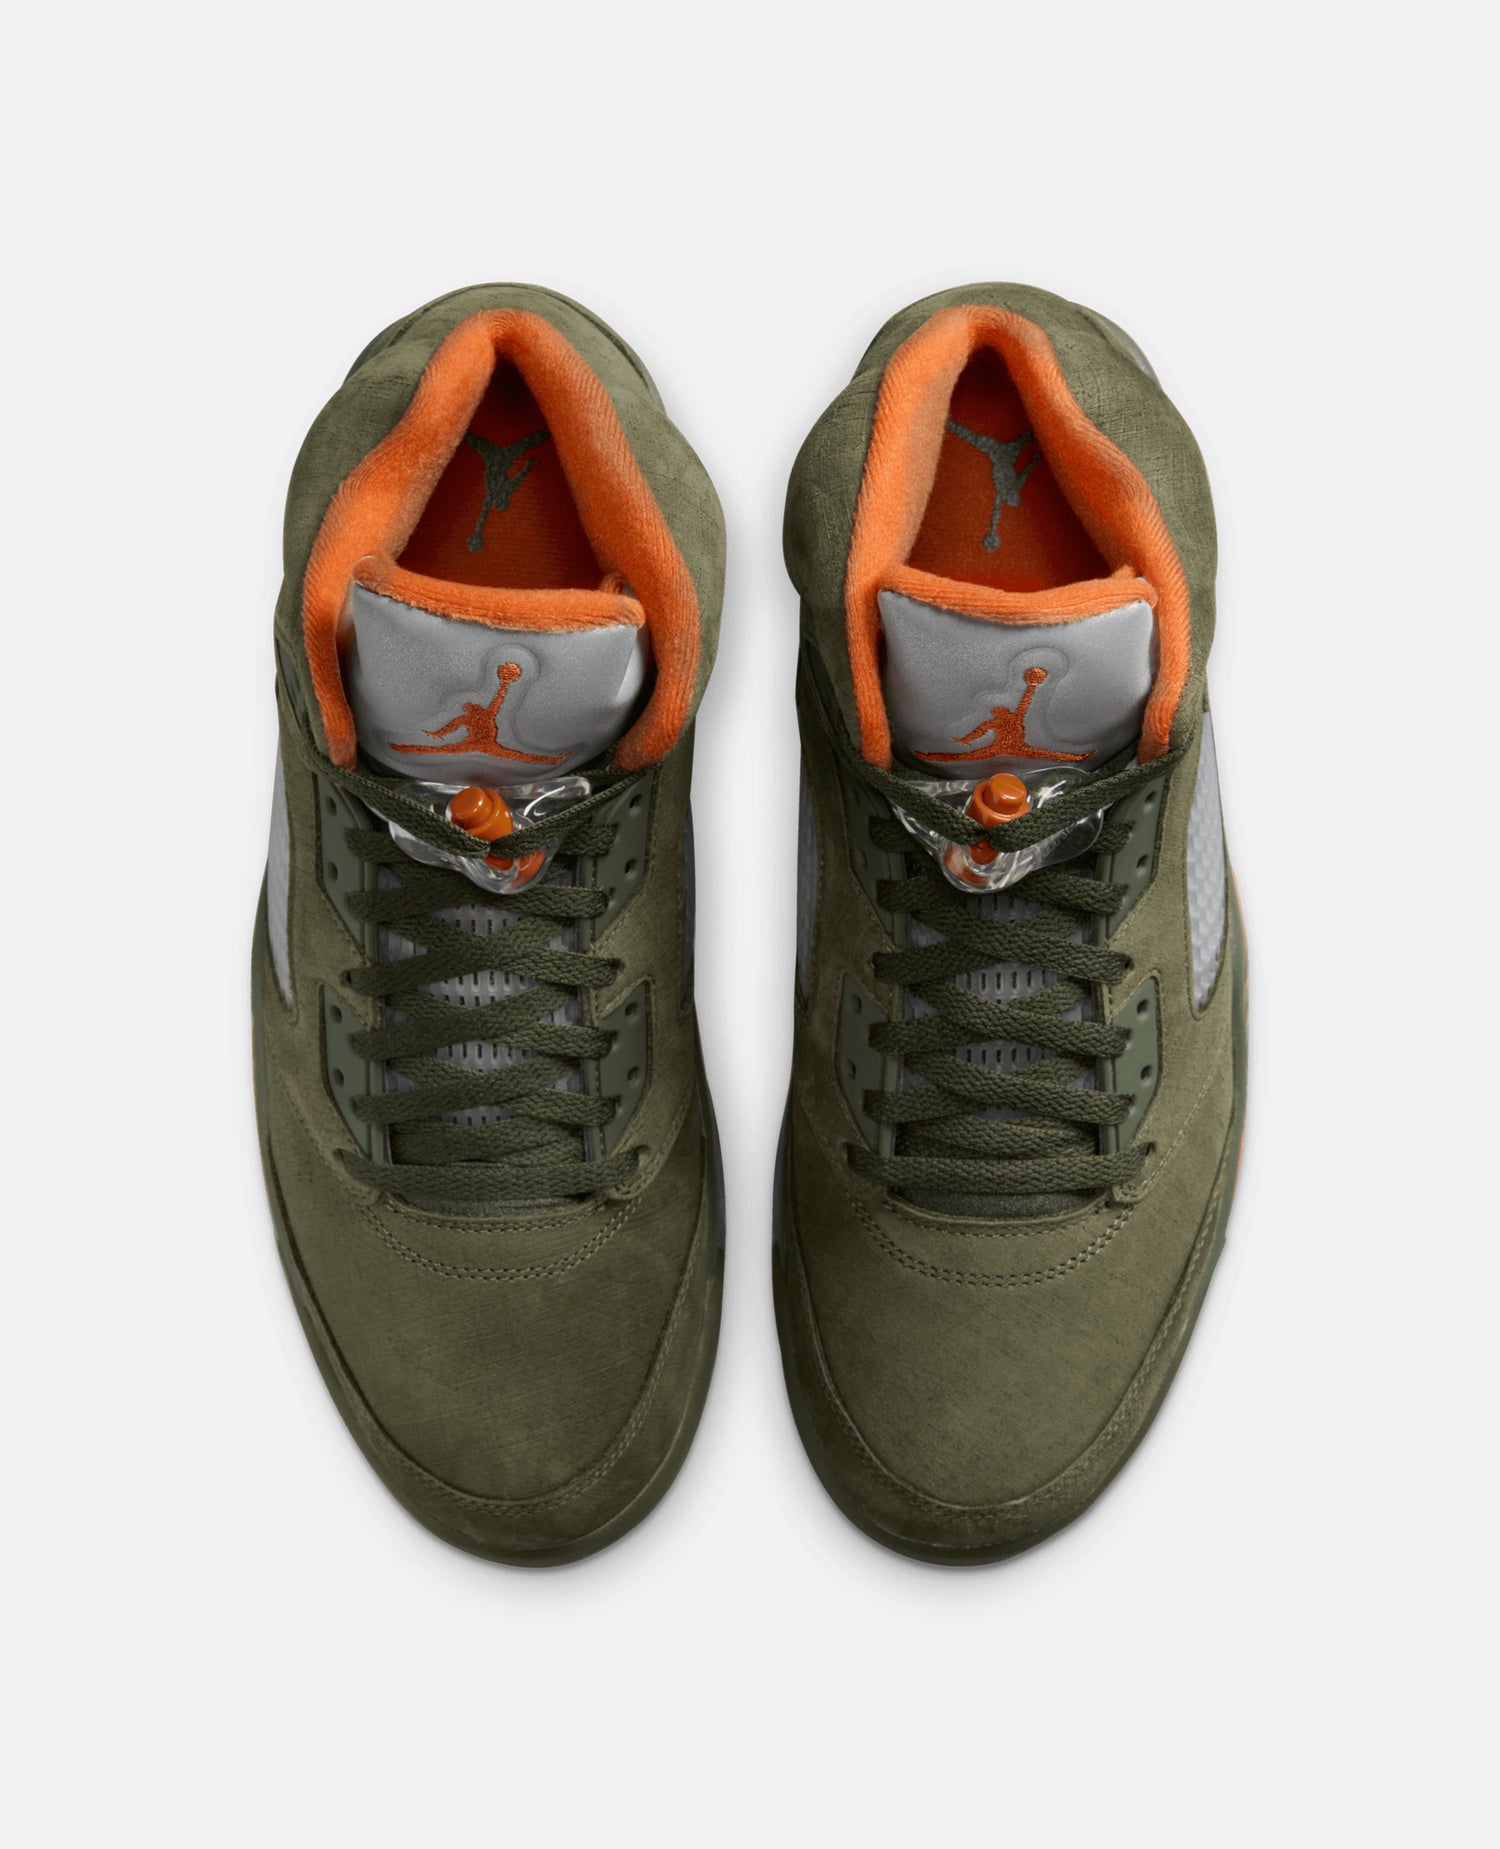 Nike Air Jordan 5 Retro (Olive armée/Orange solaire)